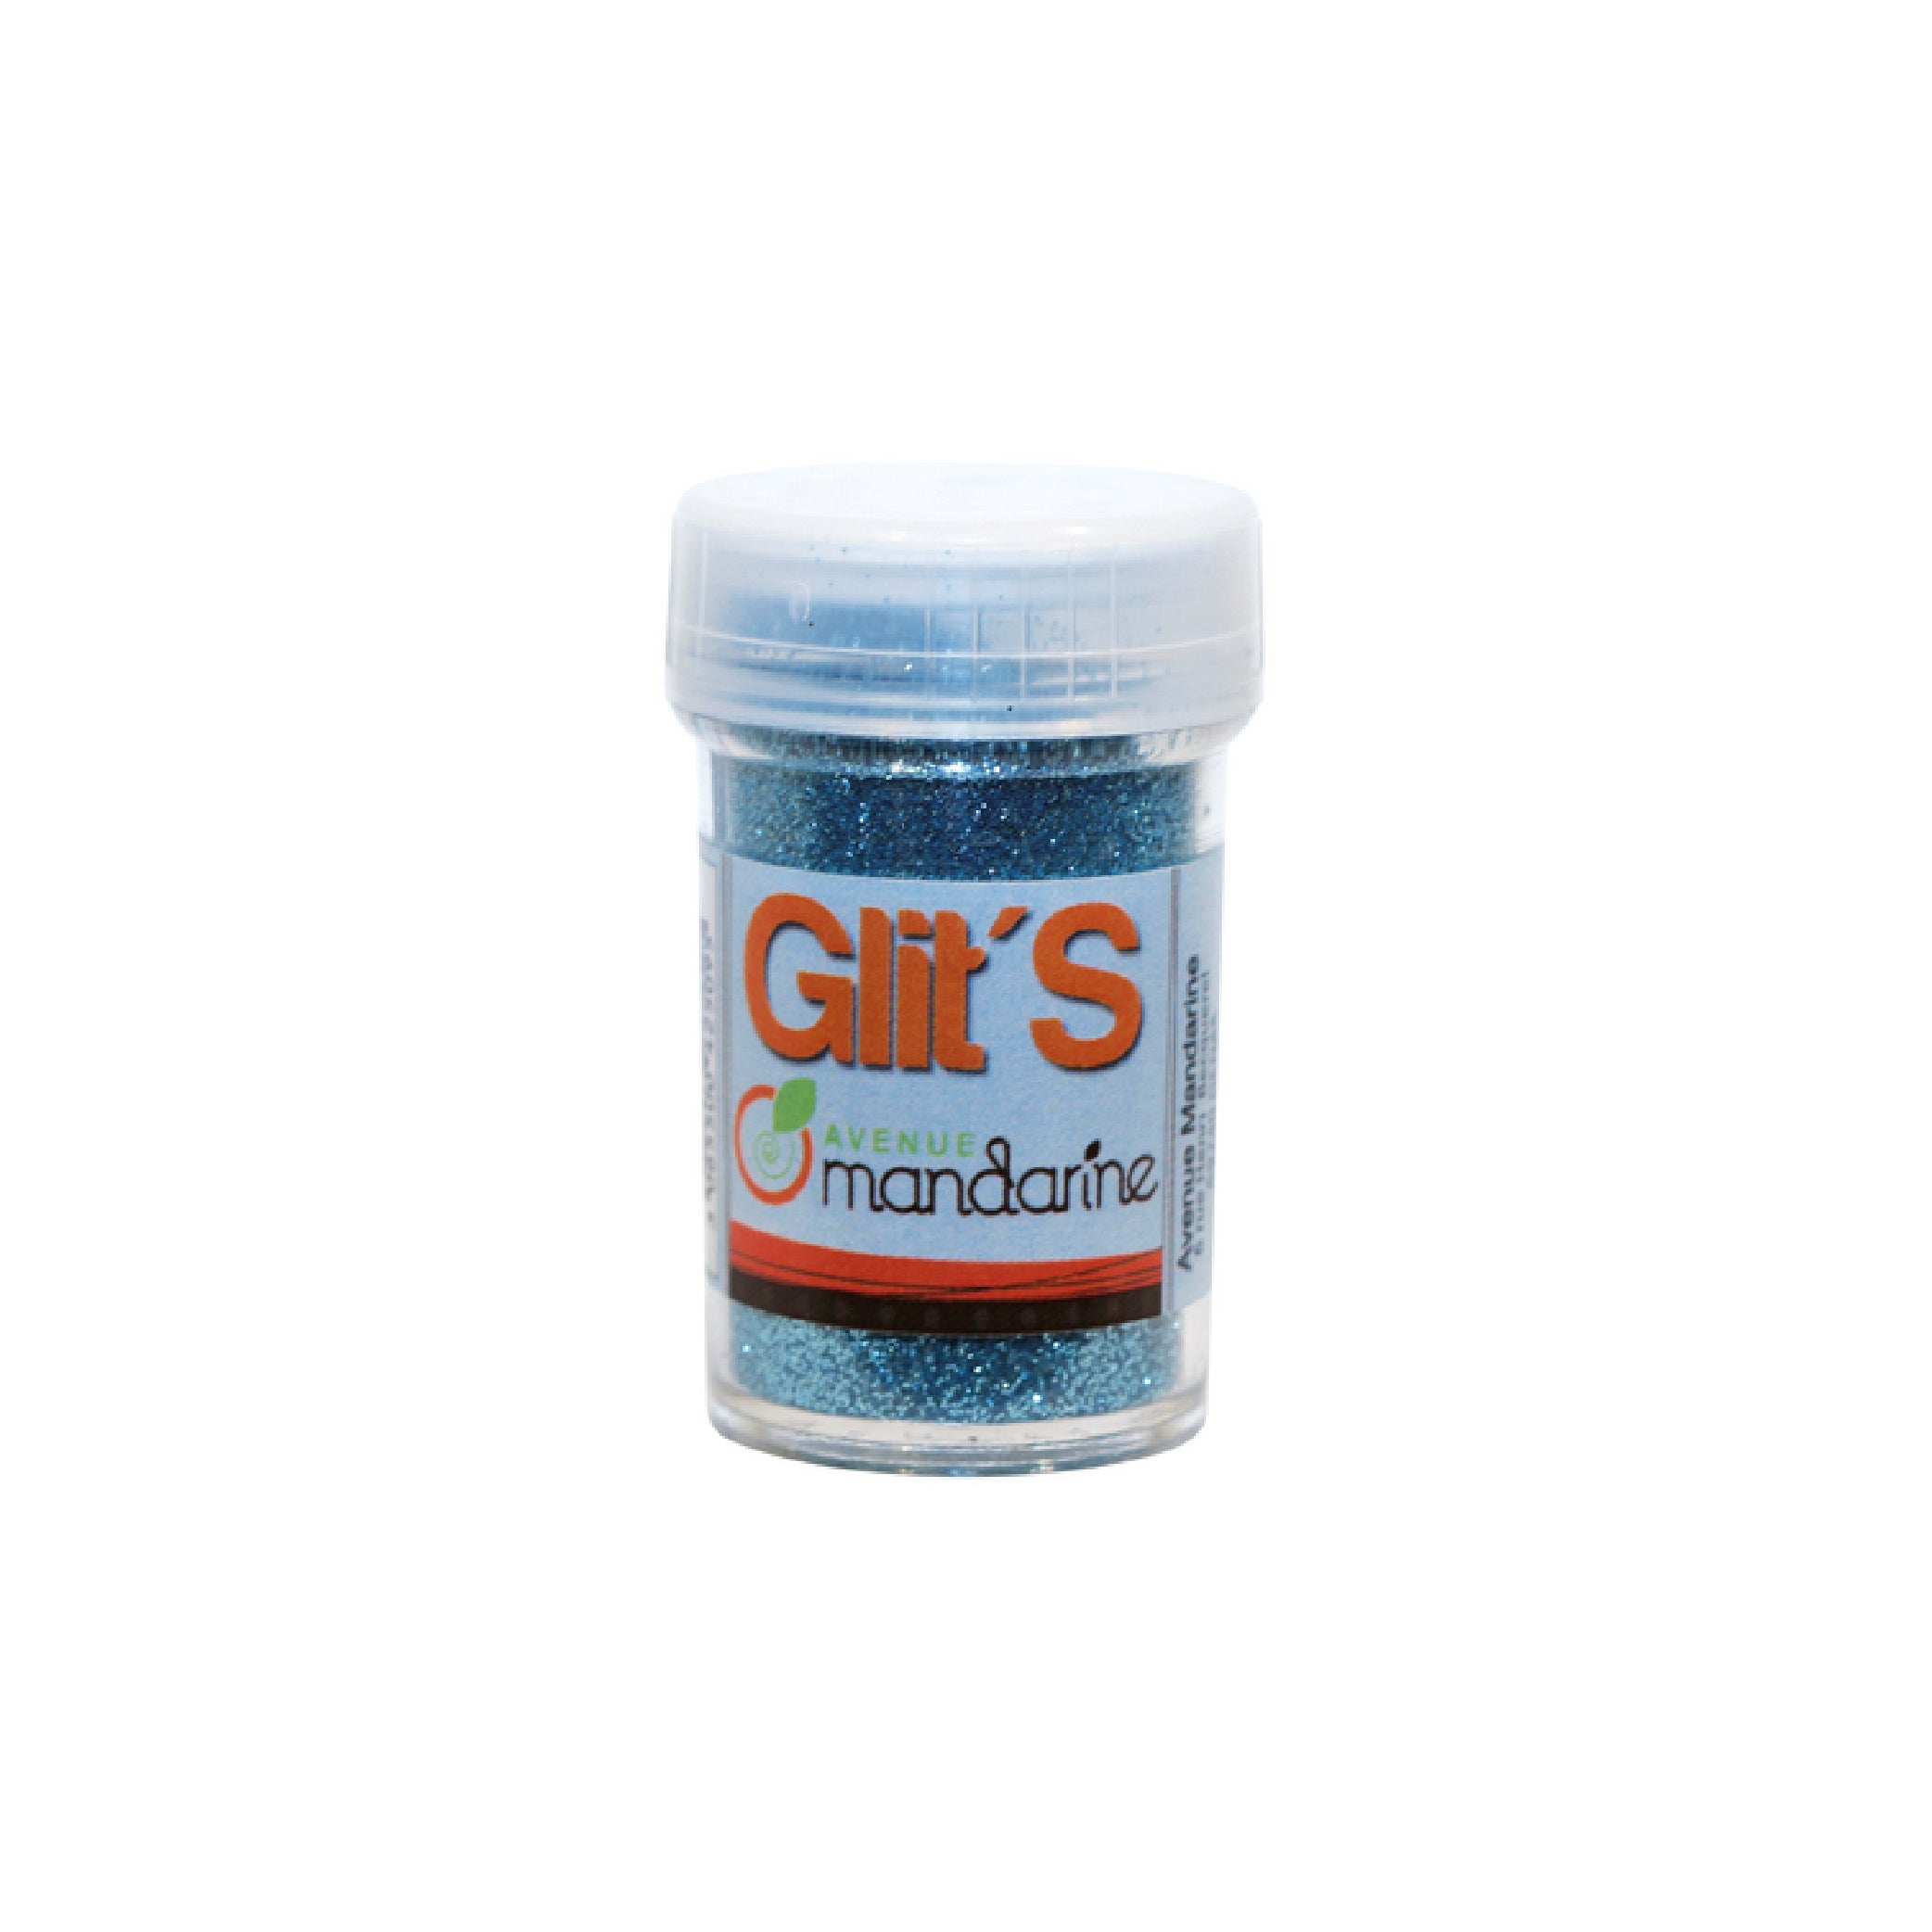 AVENUE MANDARINE Glits Glitter Powder 14g Blue Default Title